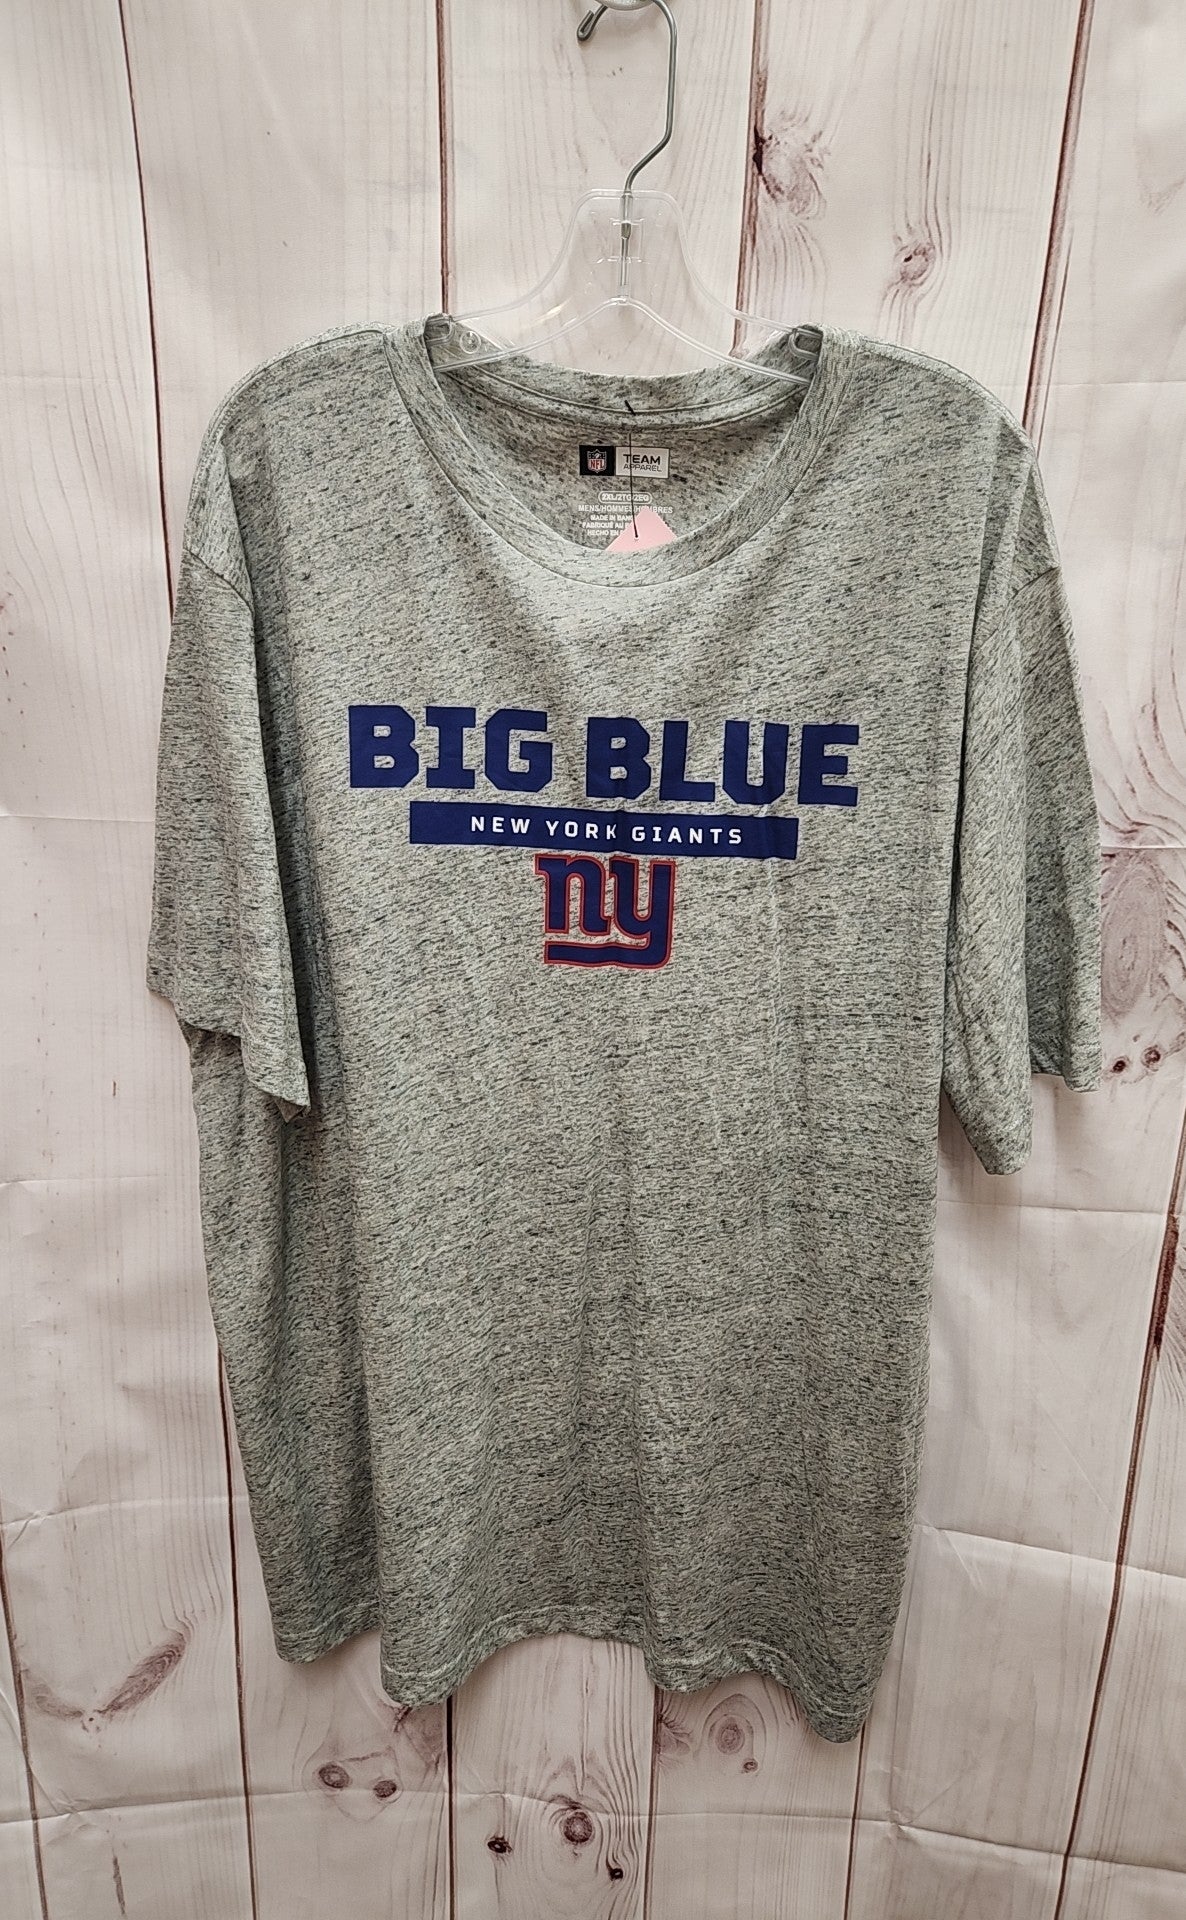 NFL Men's Size 3X Gray Shirt